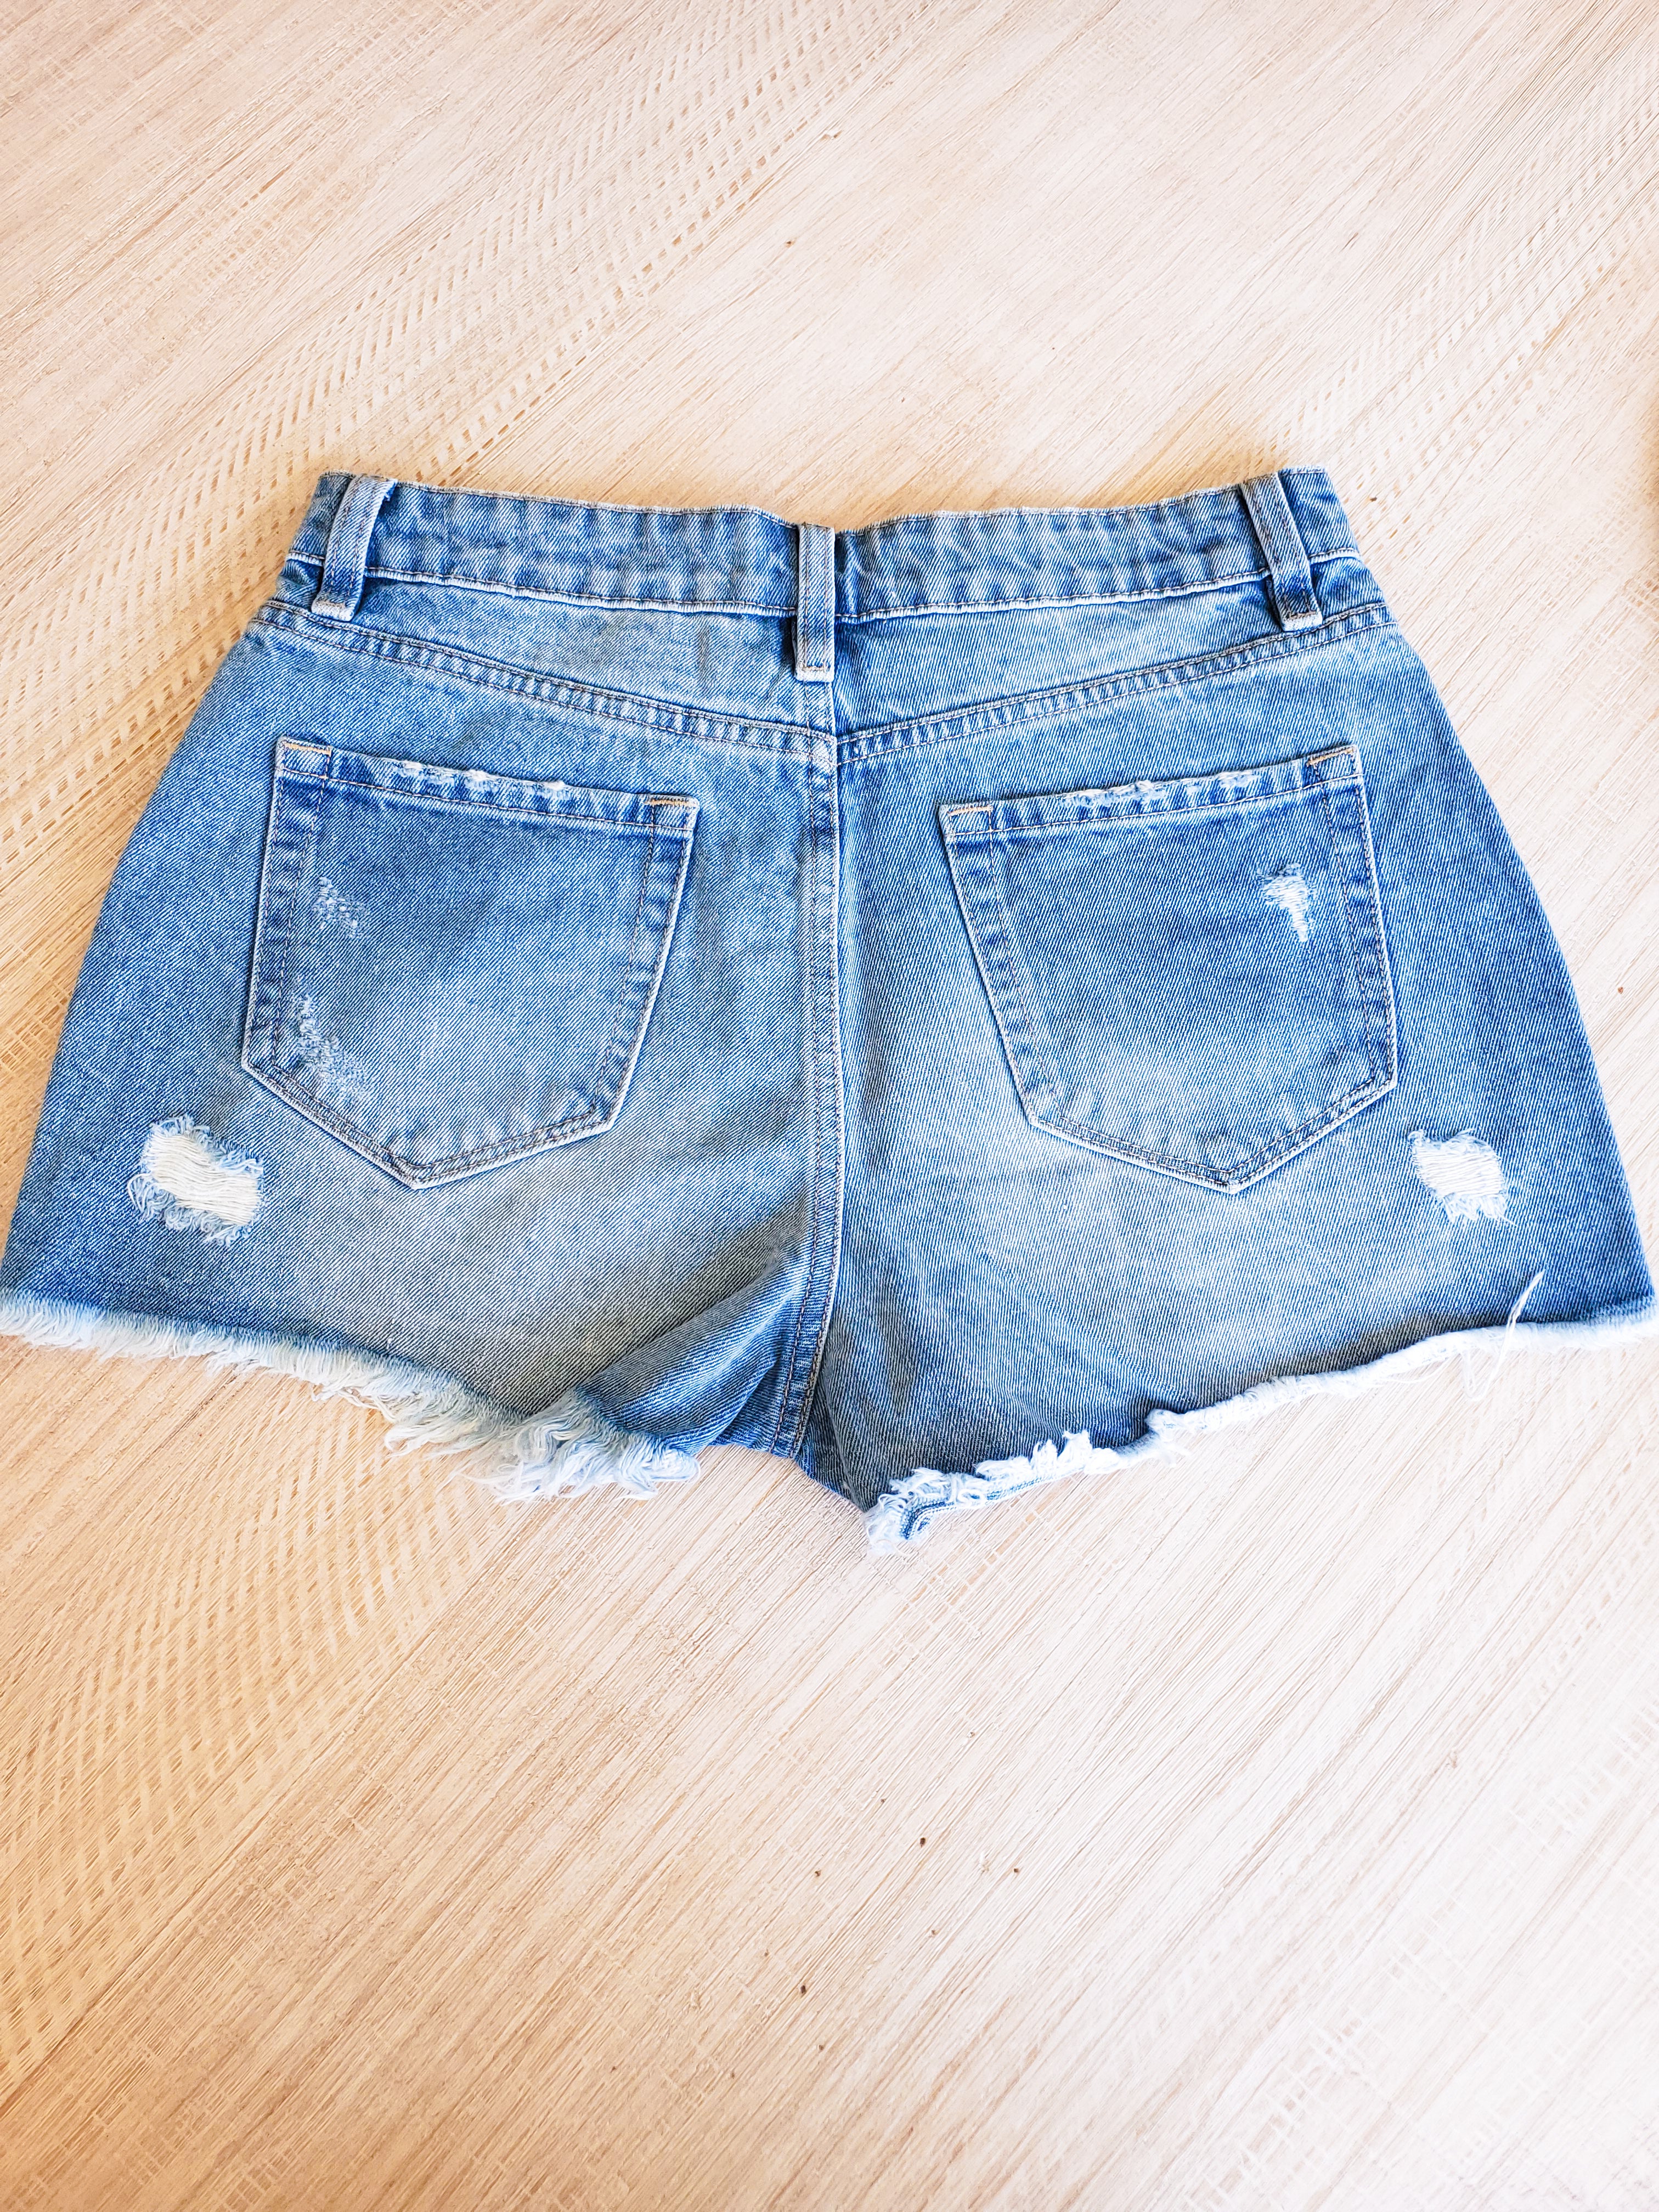 Distressed Light Wash Jean Shorts